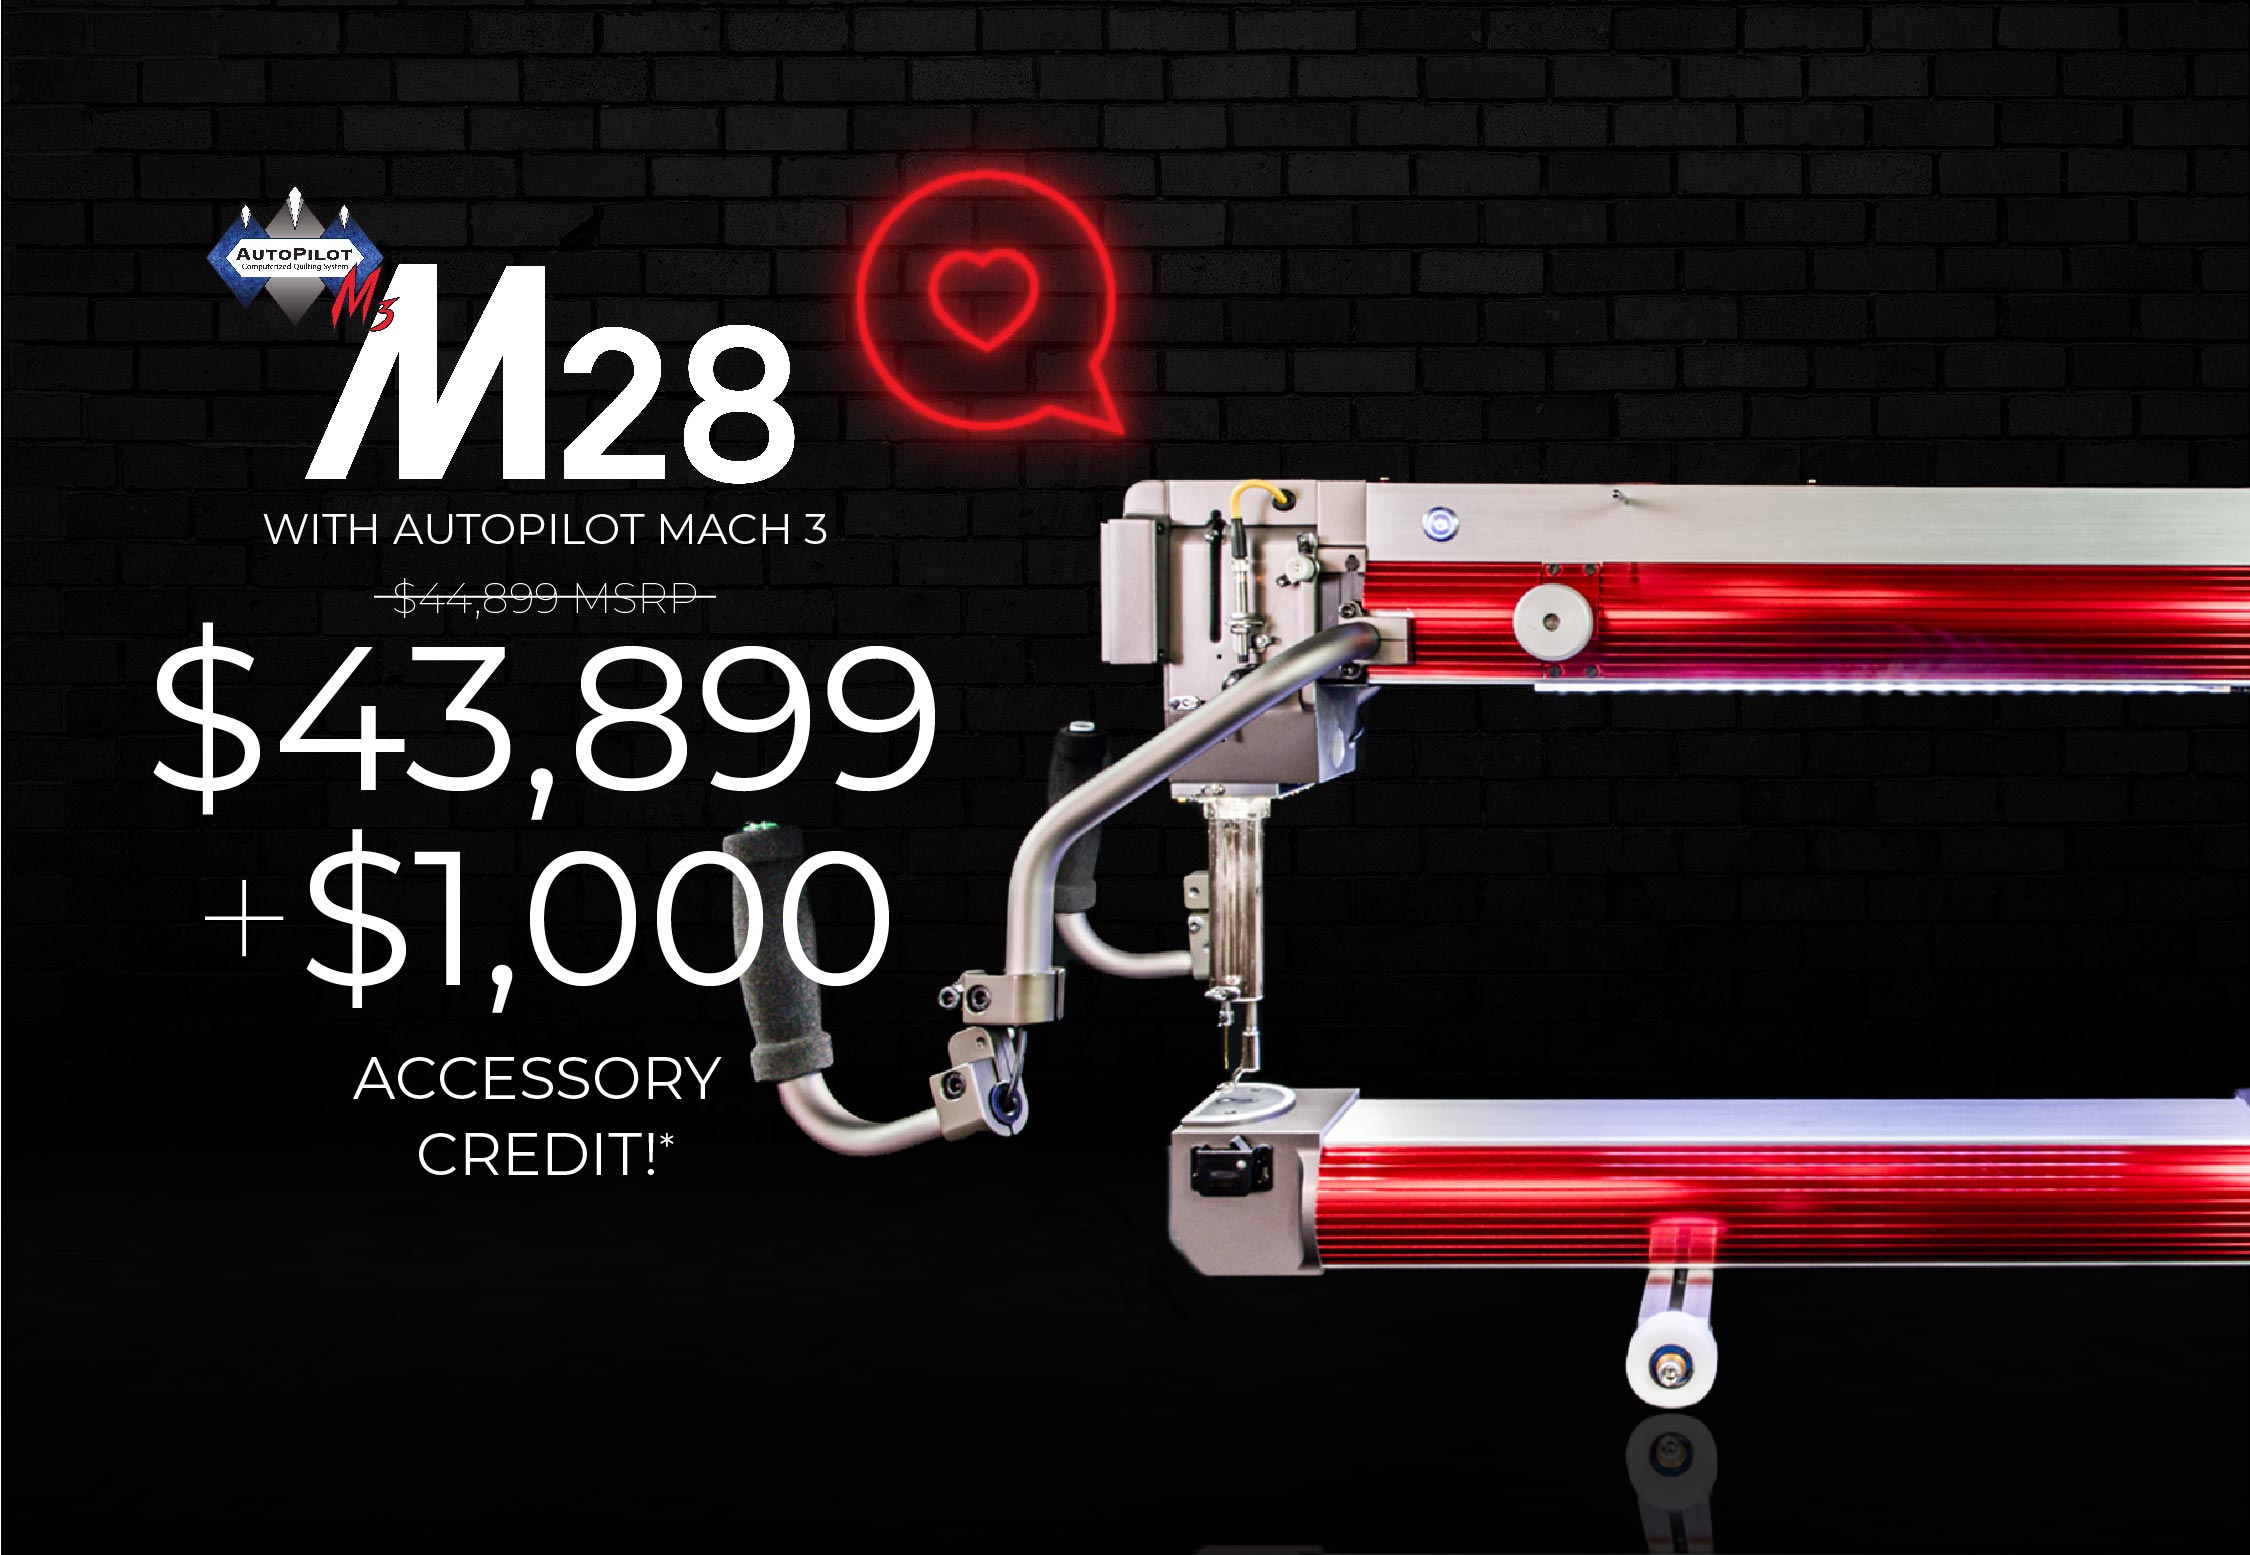 INNOVA M Series with Autopilot Mach 3 Valentine's Sale